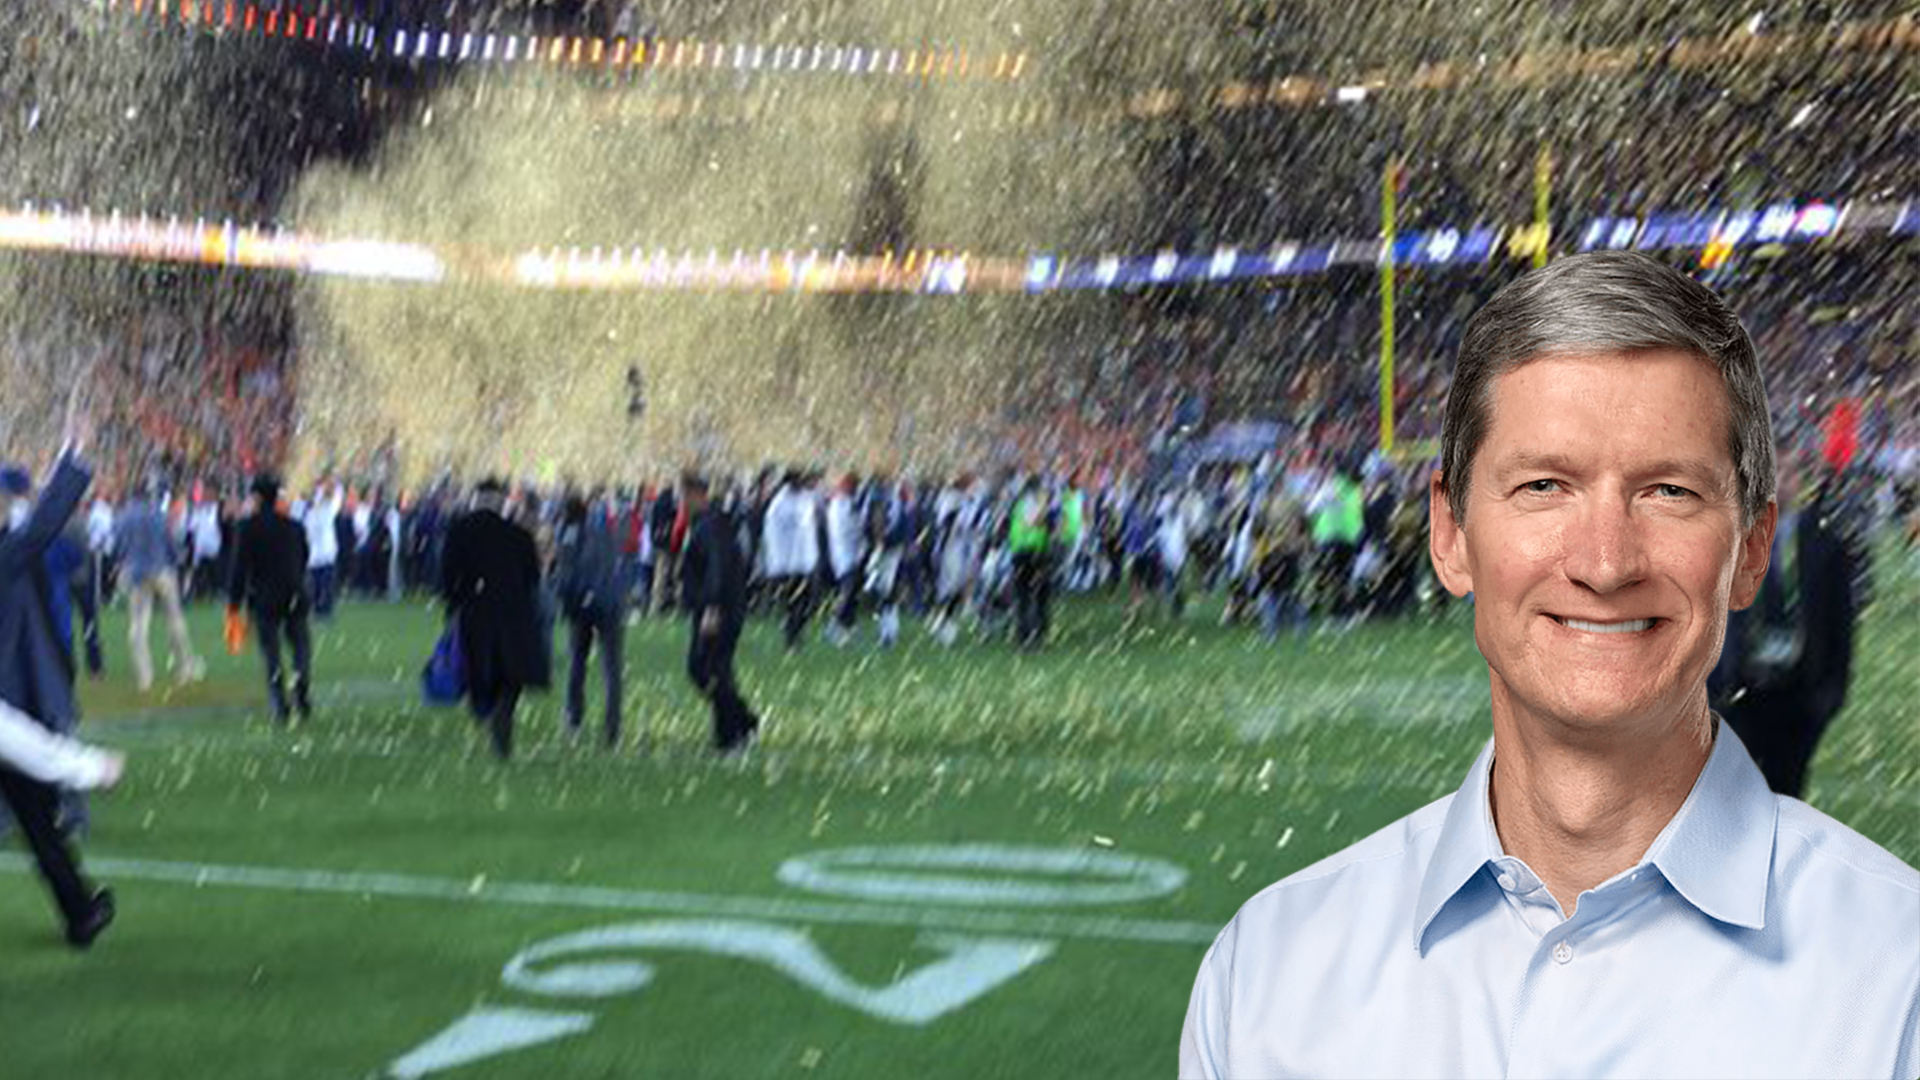 Tim Cook โดนแซะซะแล้ว!!! ภาพ Shot on iPhone ถ่ายเองกับมือแต่สุดเบลอ ในงาน Super Bowl 50